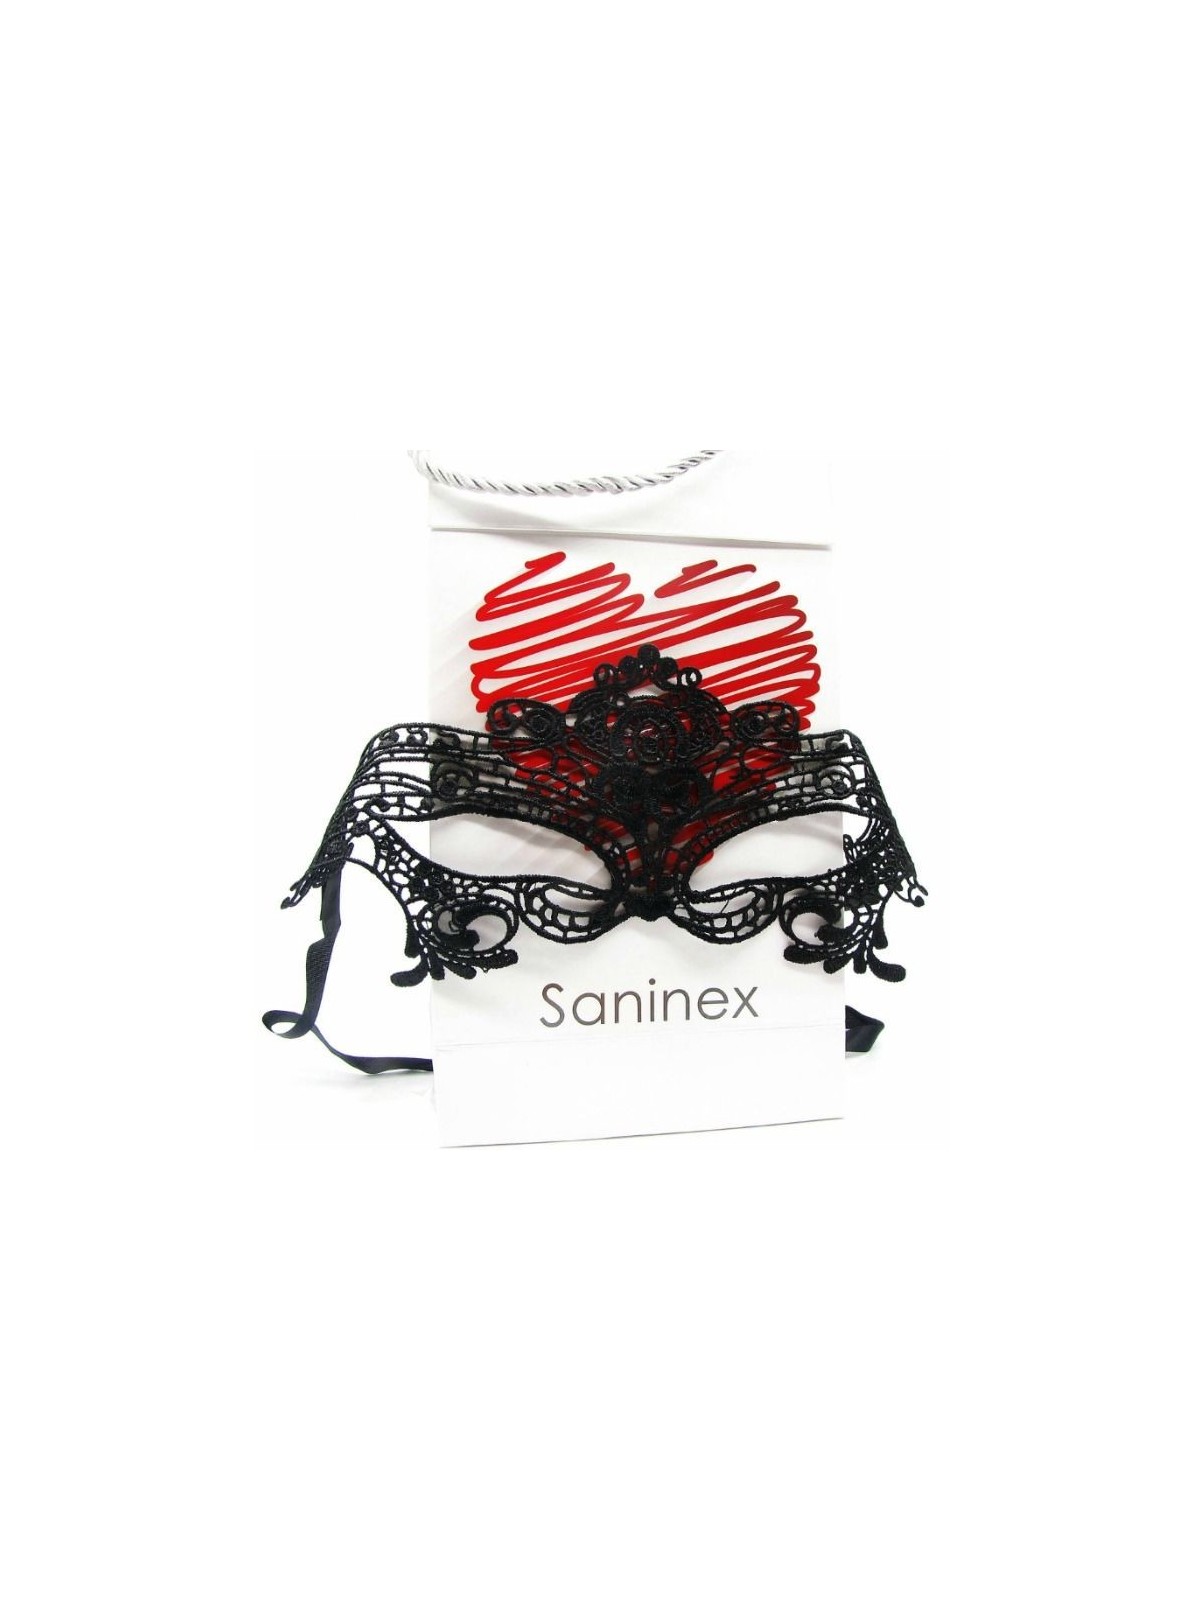 Saninex Mascara Exciting Experience - Comprar Máscara erótica Saninex - Máscaras eróticas (1)